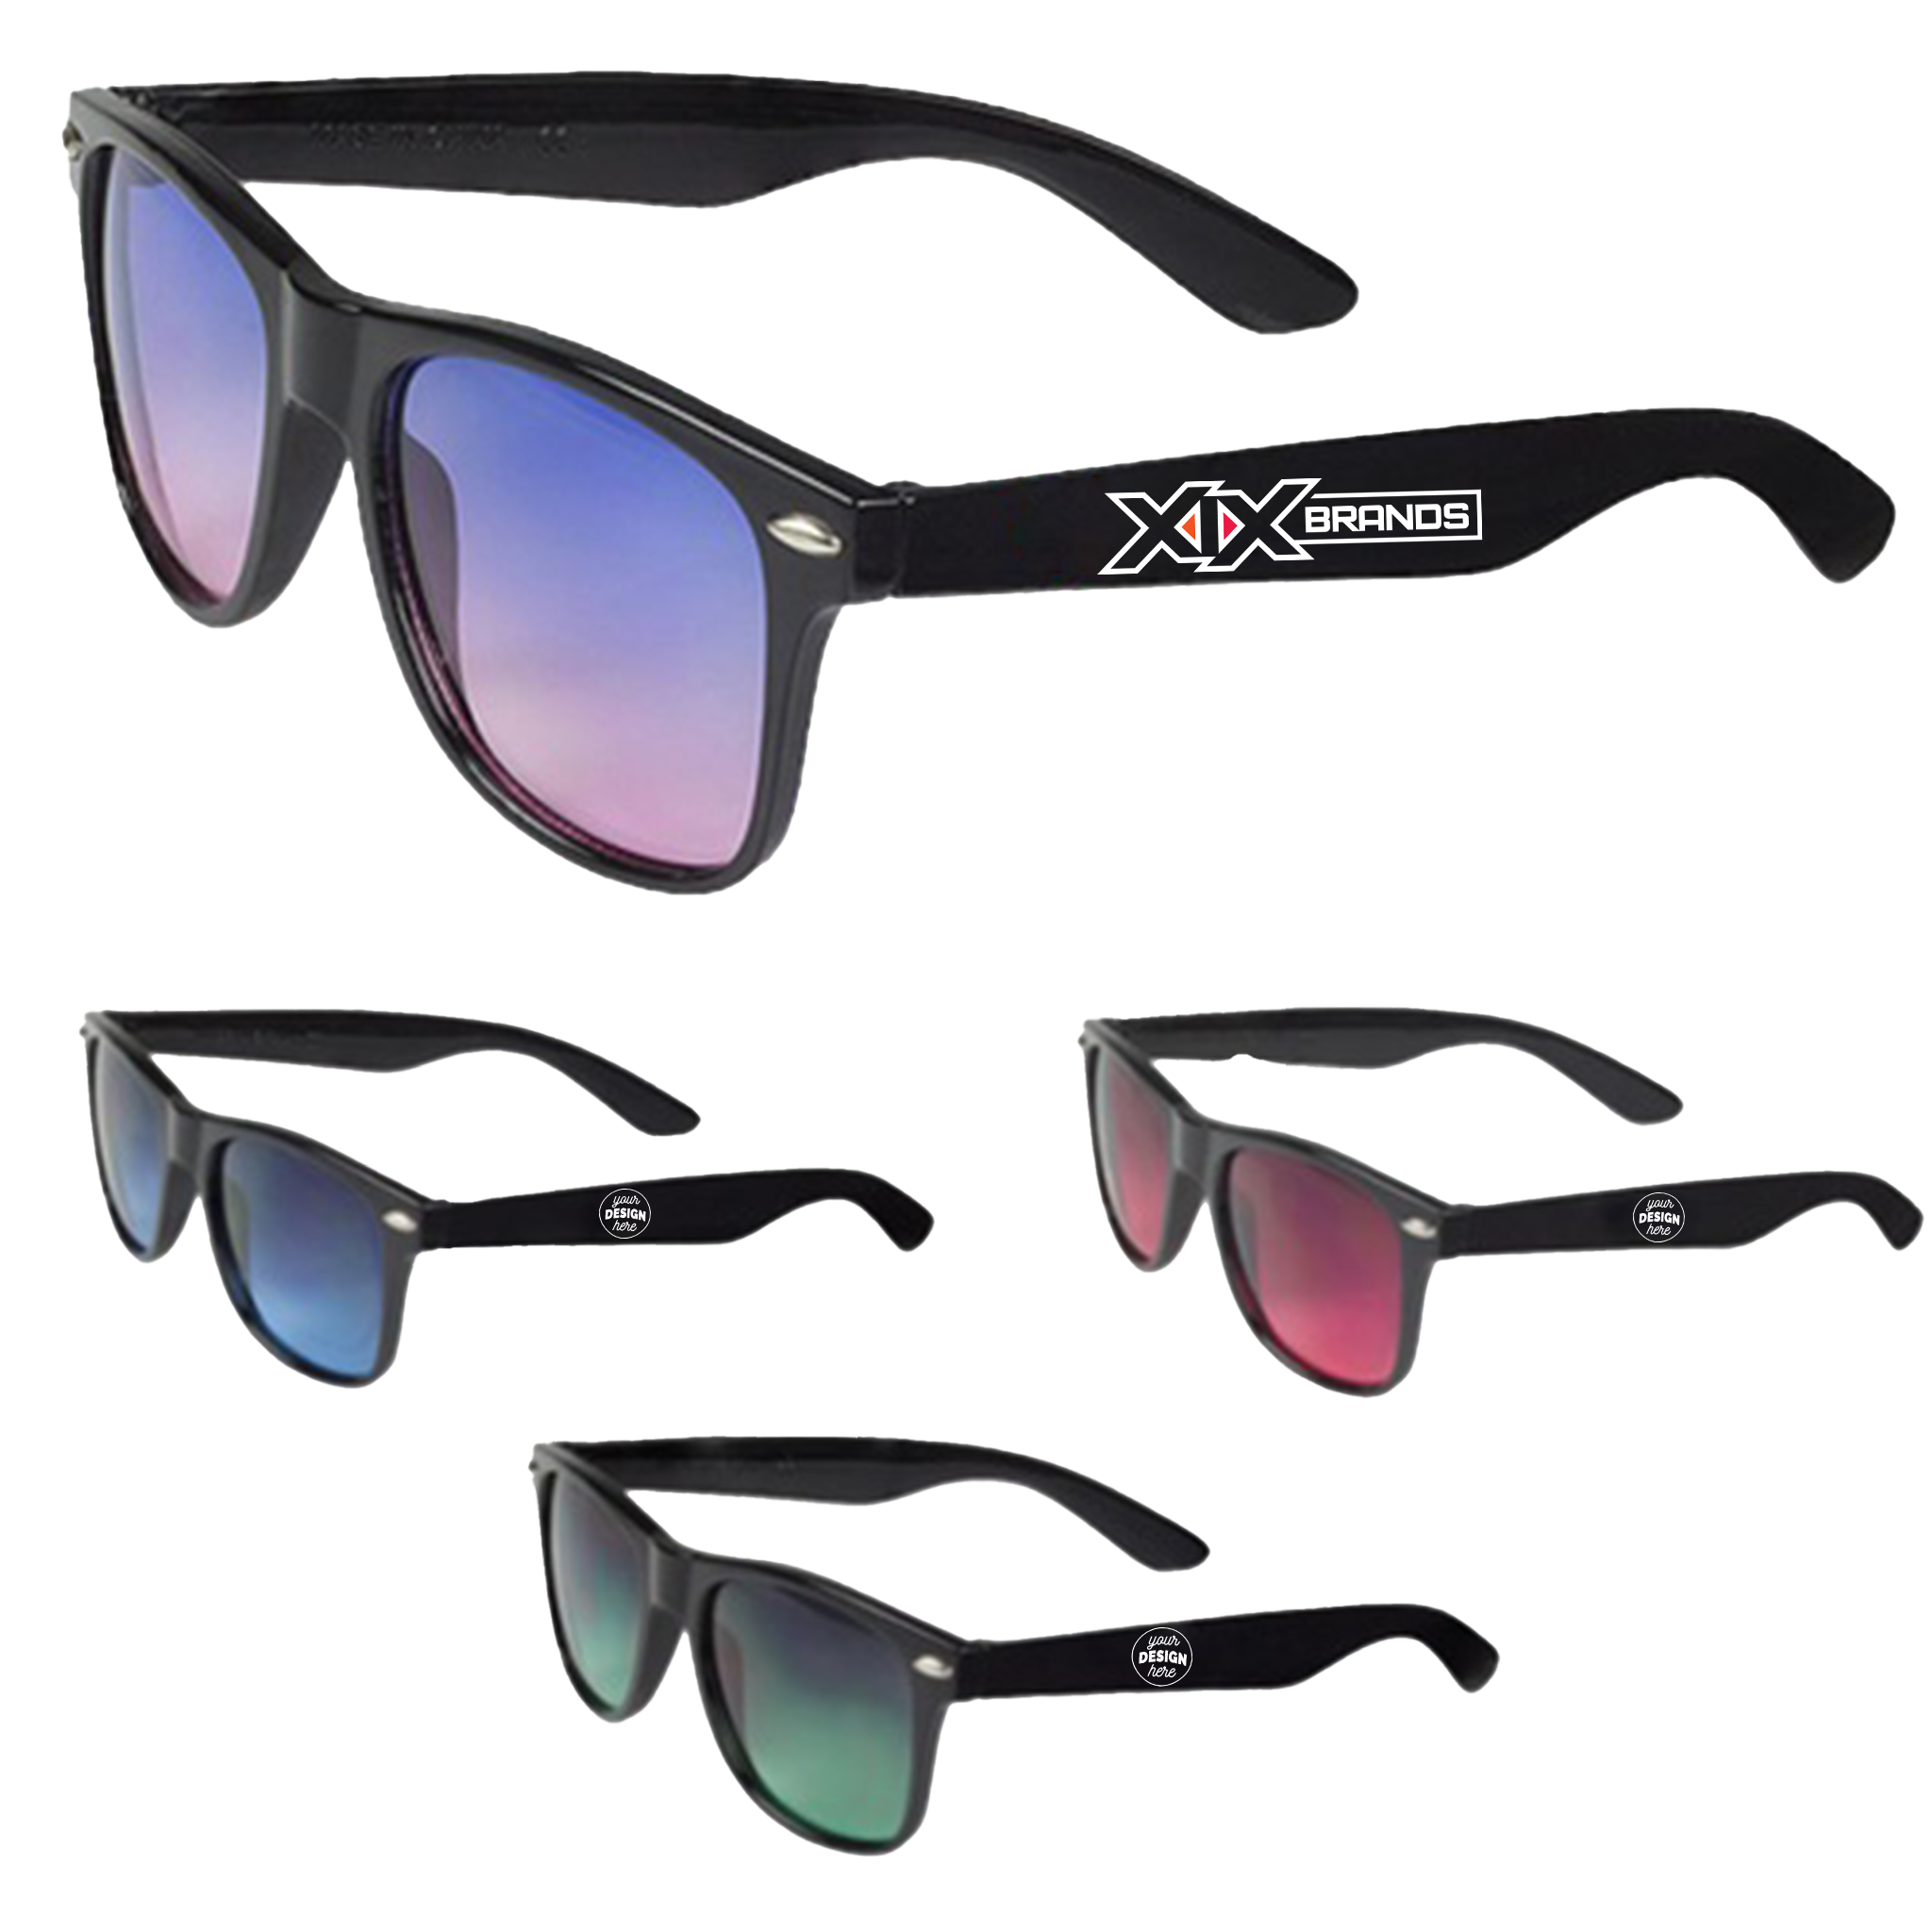 Ocean Gradient Mirrored Sunglasses - 50 Pack - Customizable